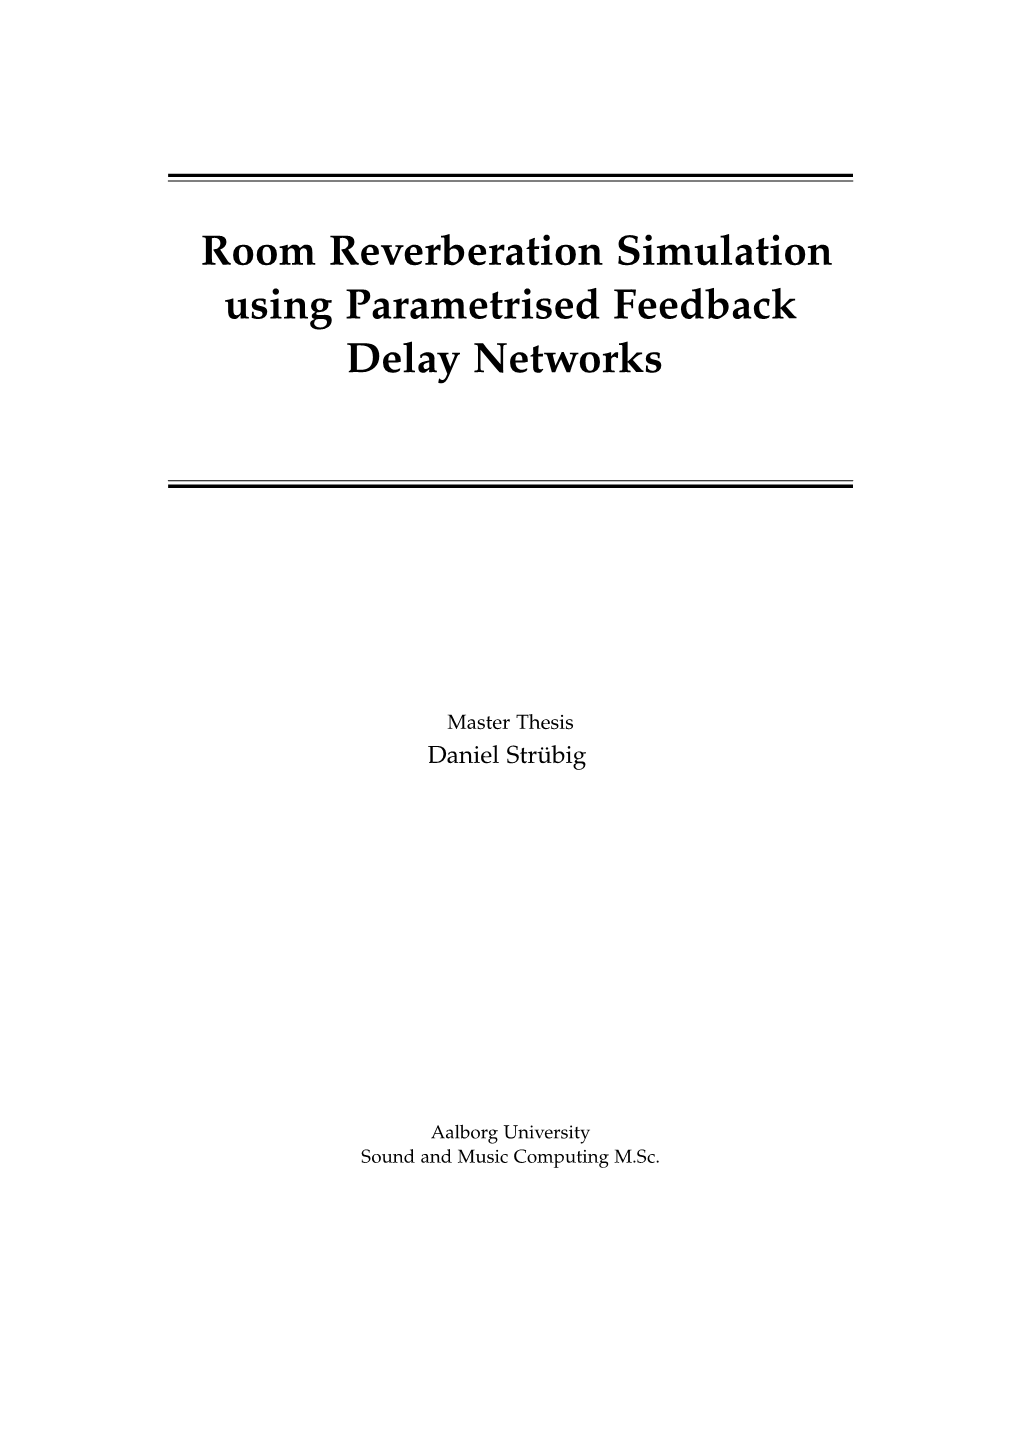 Room Reverberation Simulation Using Parametrised Feedback Delay Networks